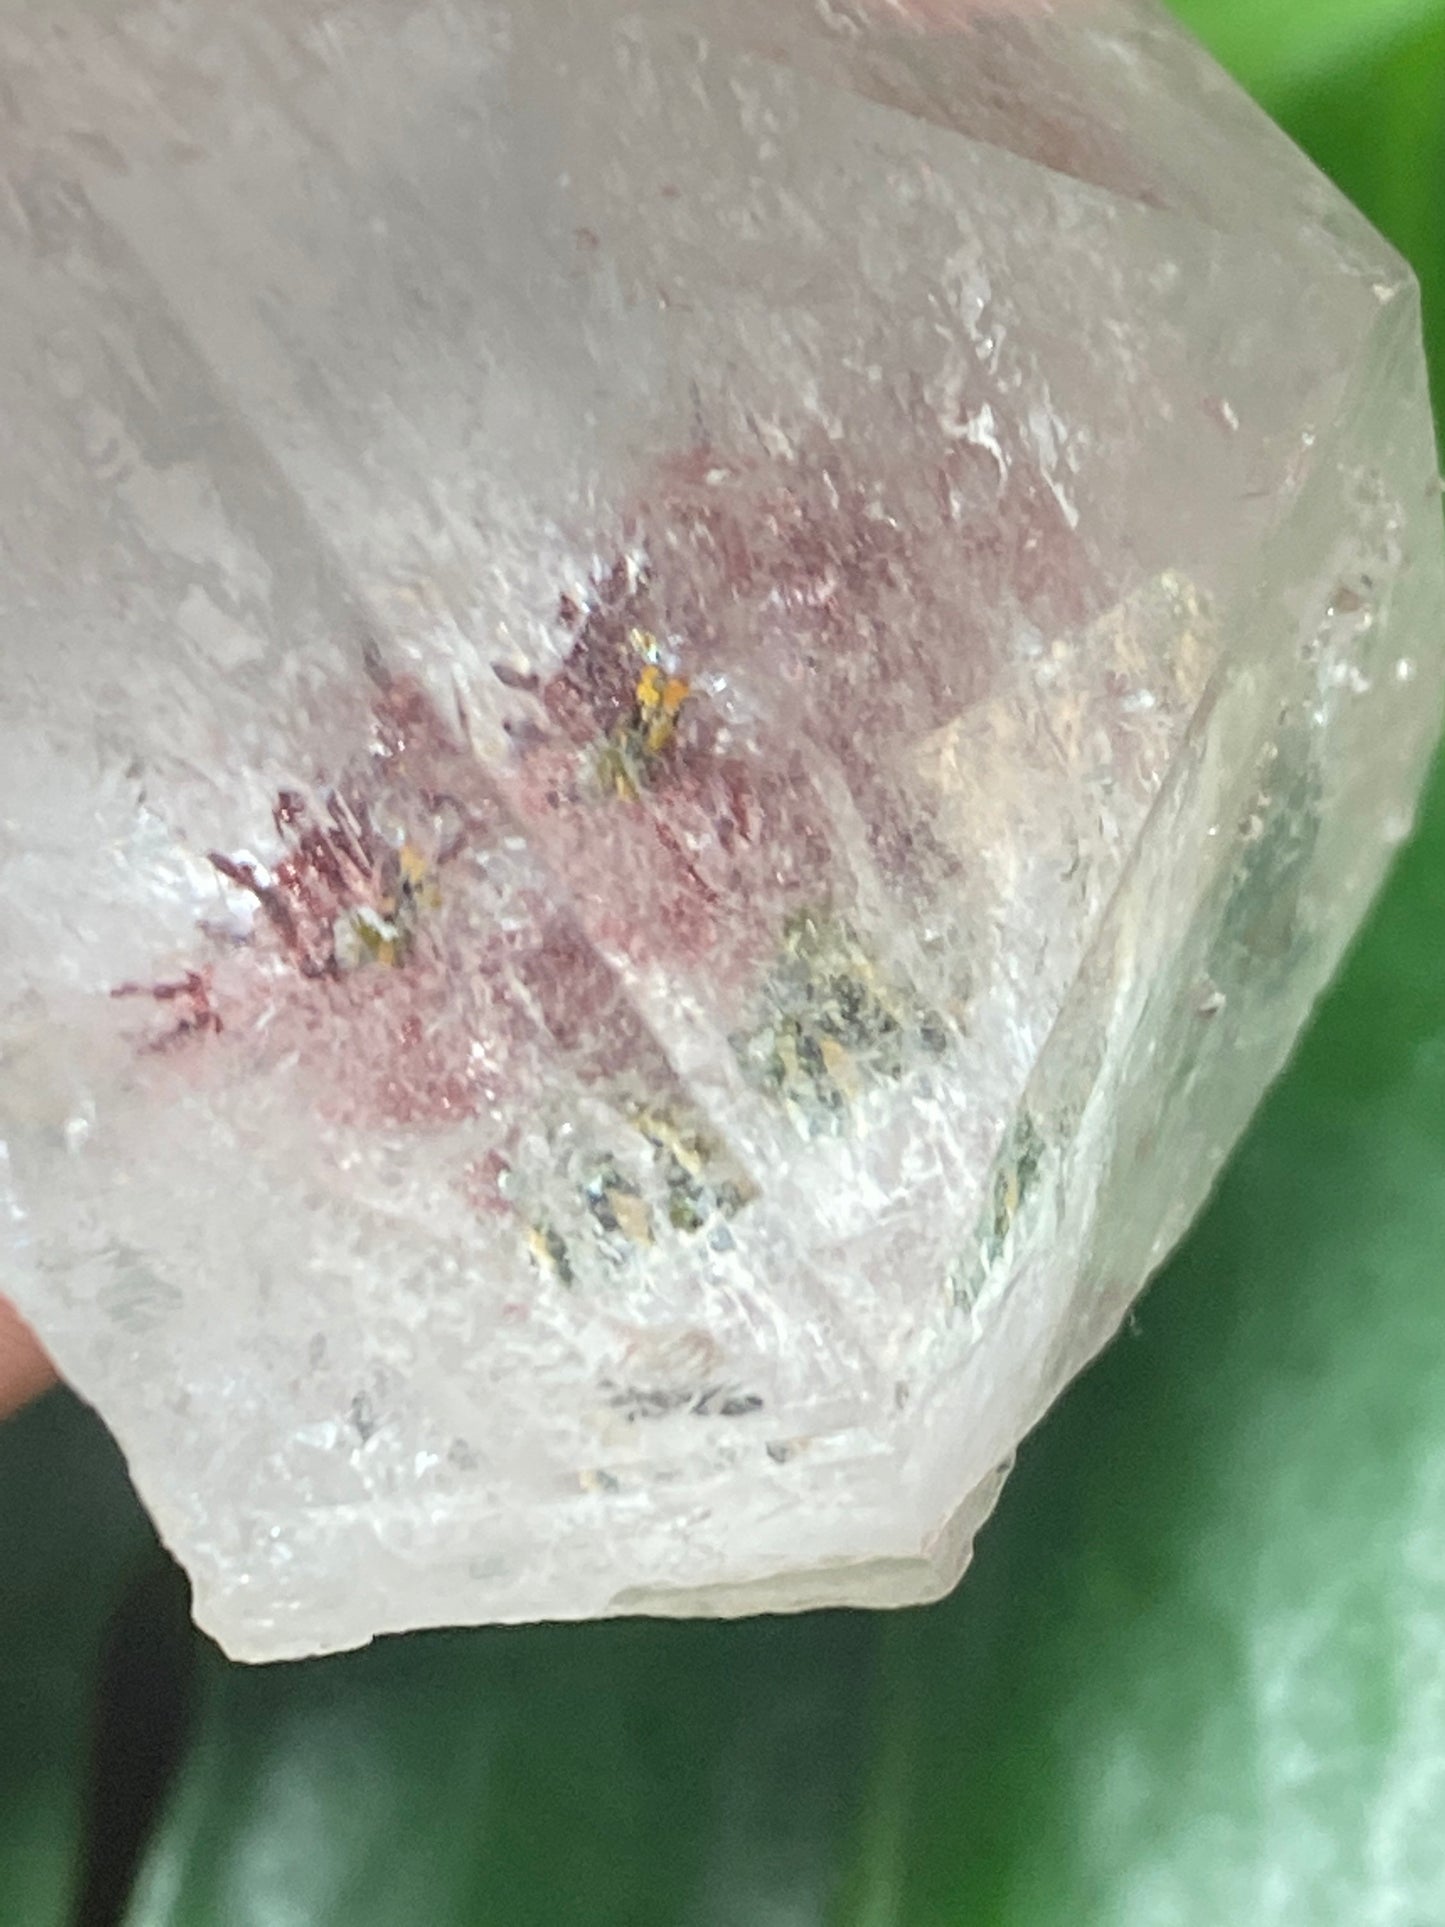 Stunning Inclusions Garden Quartz Amethyst Epidote Crystal Point Raw Mineral Thumbnail Collectors Specimen GA10 42g